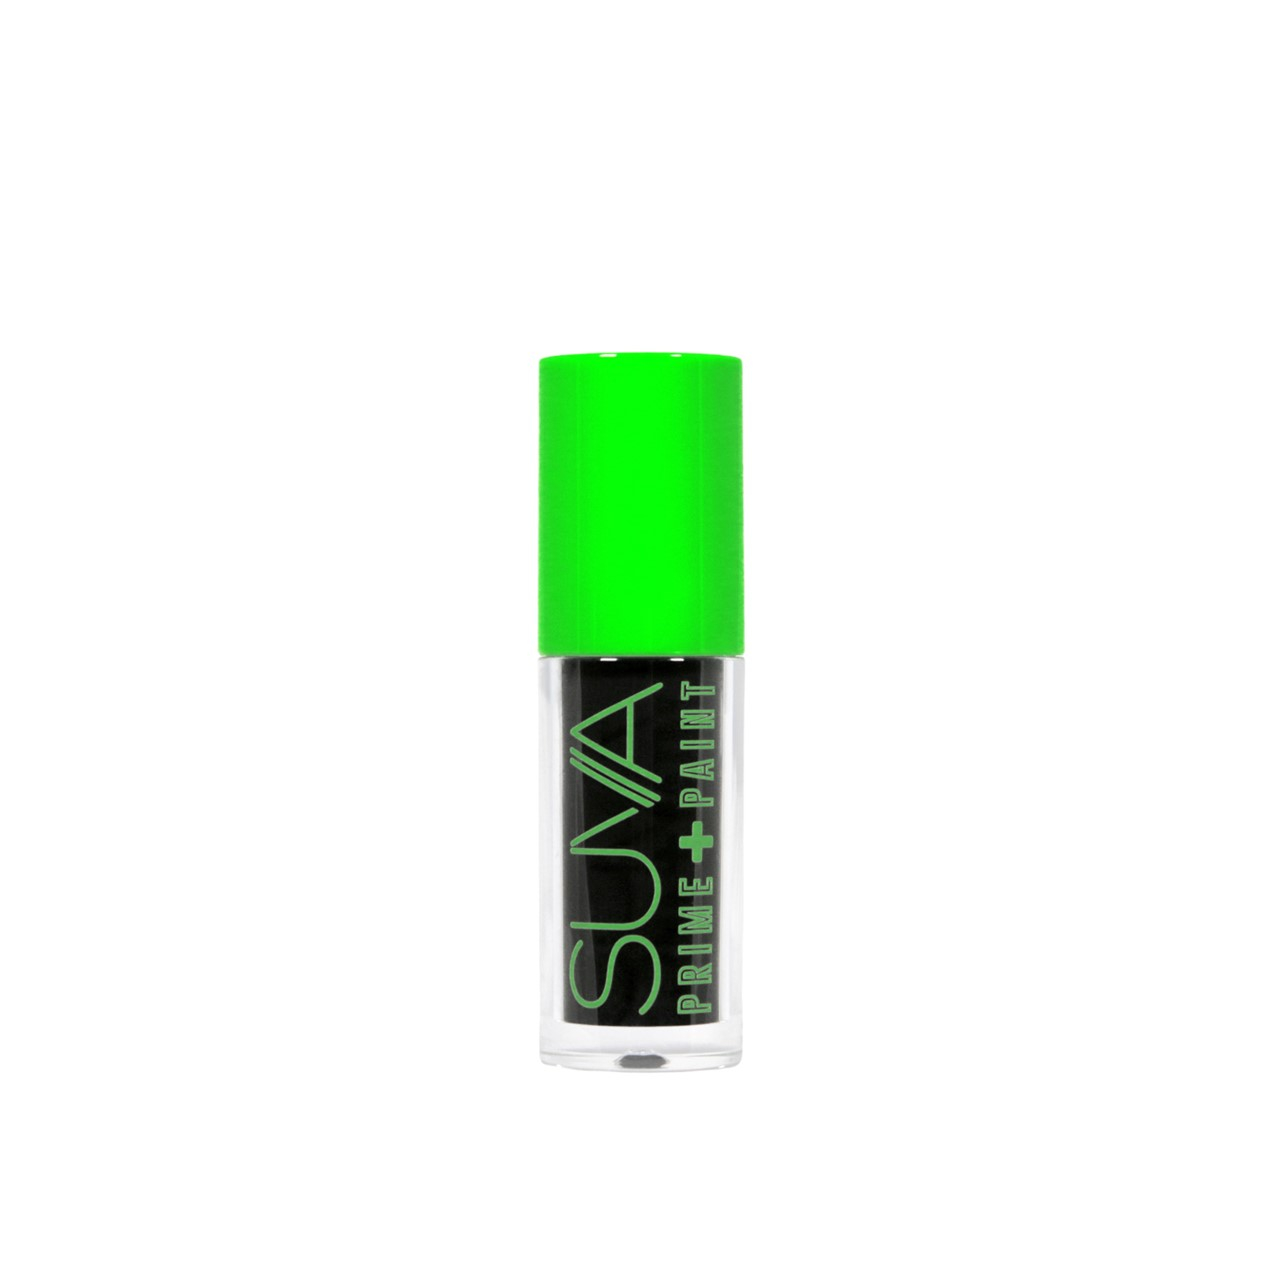 SUVA Beauty Prime + Paint Black 5ml (0.17 fl oz)